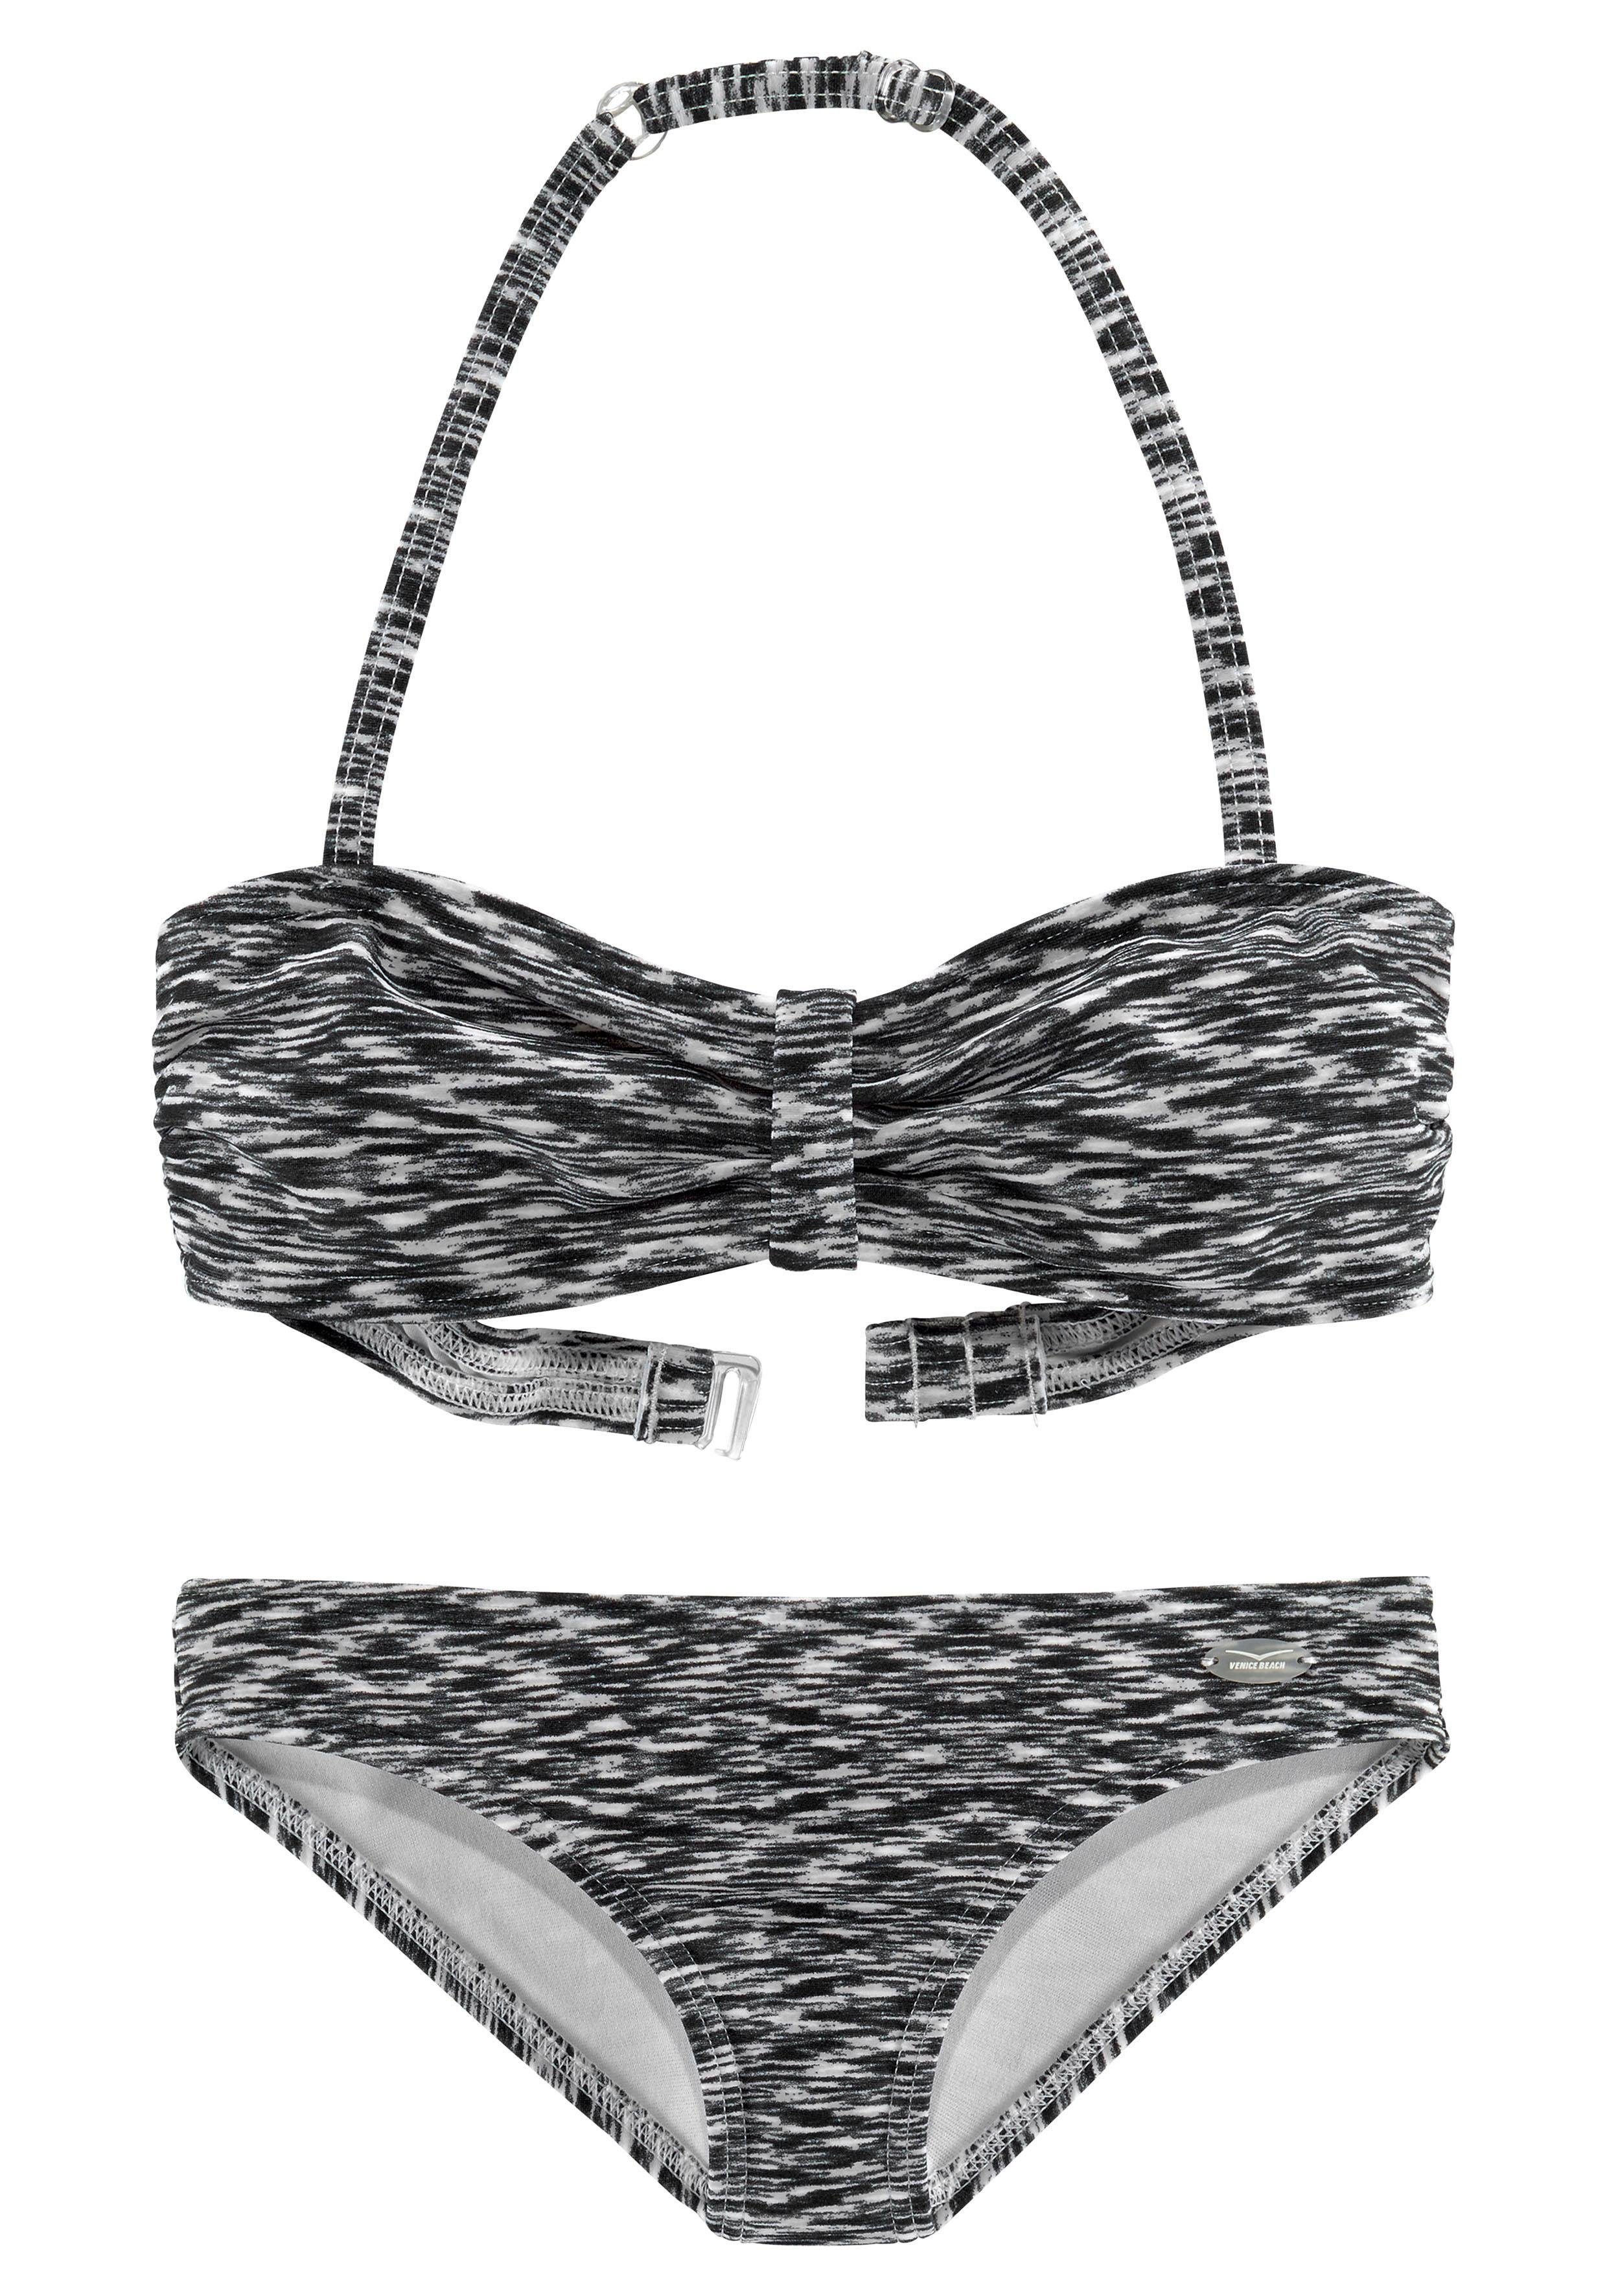 Bandeau-Bikini in schwarz-weiß Beach Melange-Optik Venice